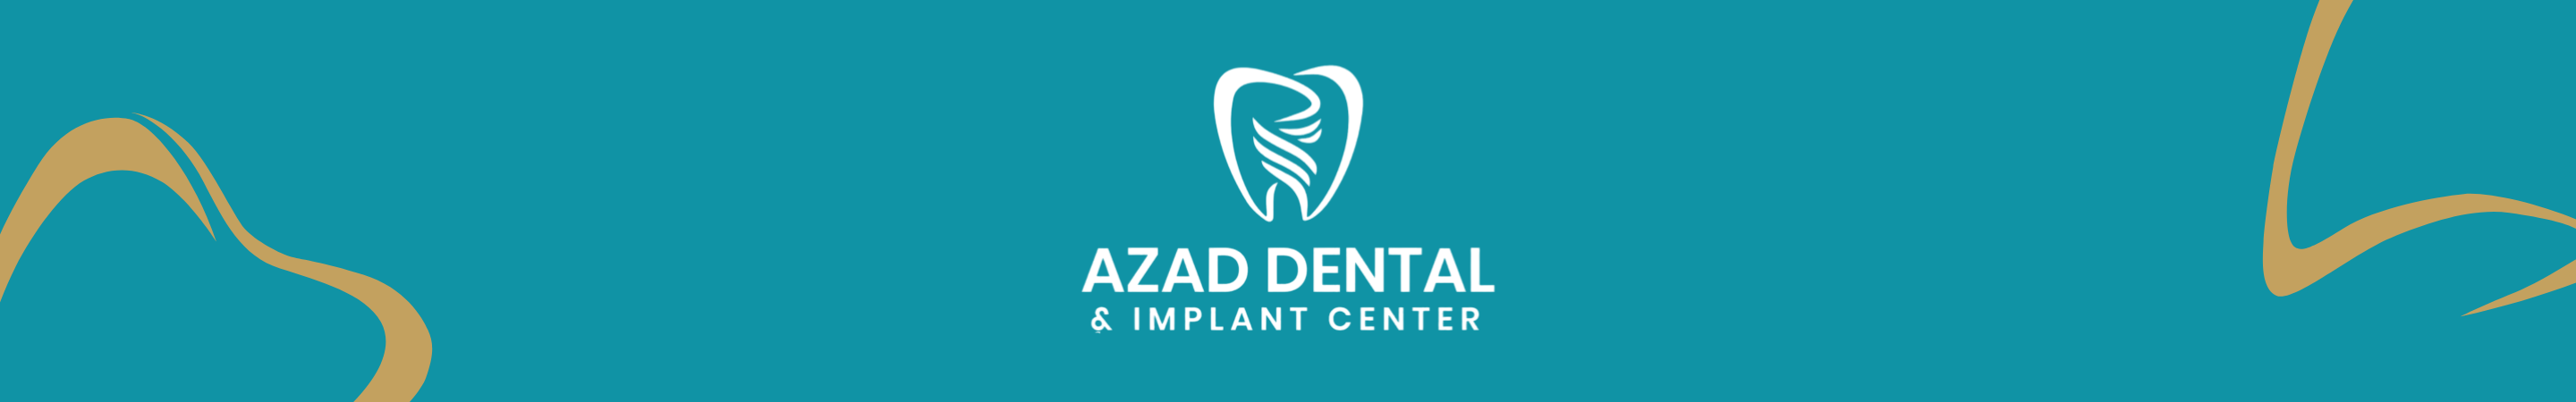 Azad Dental & Implant Centre